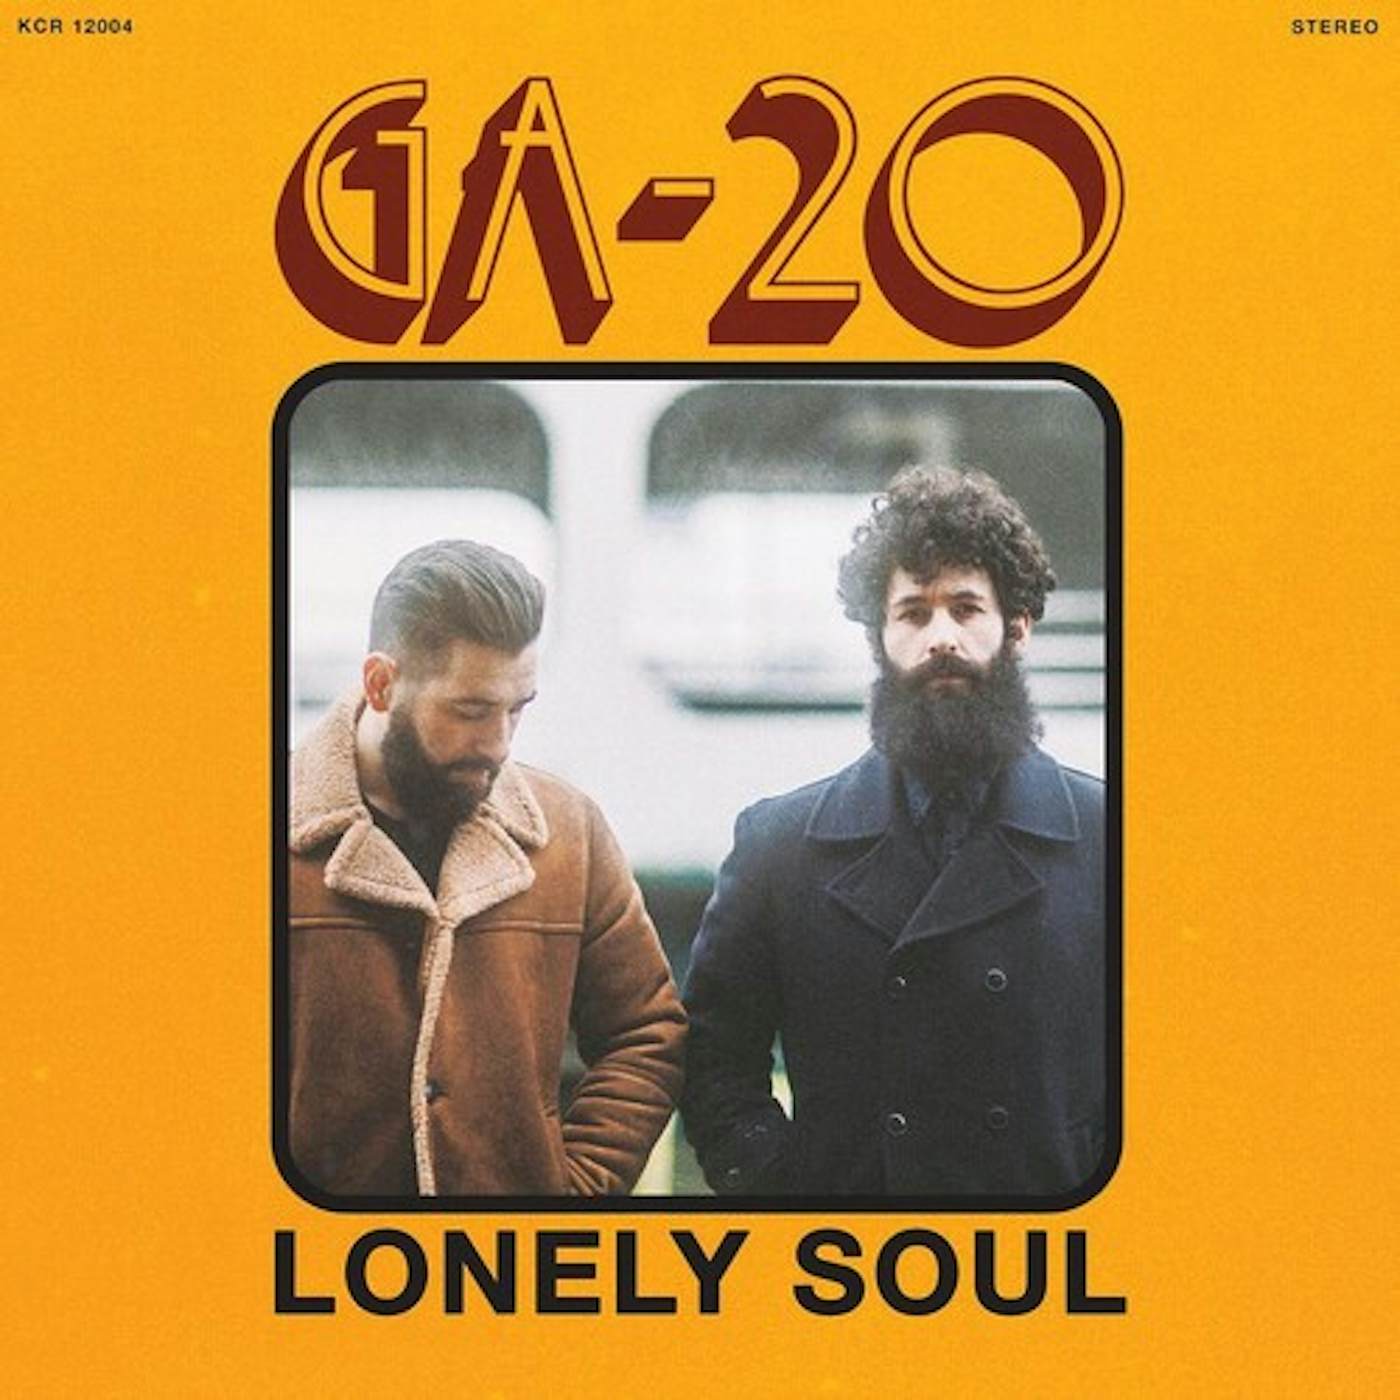 GA-20 Lonely Sould - Blue Vinyl Record